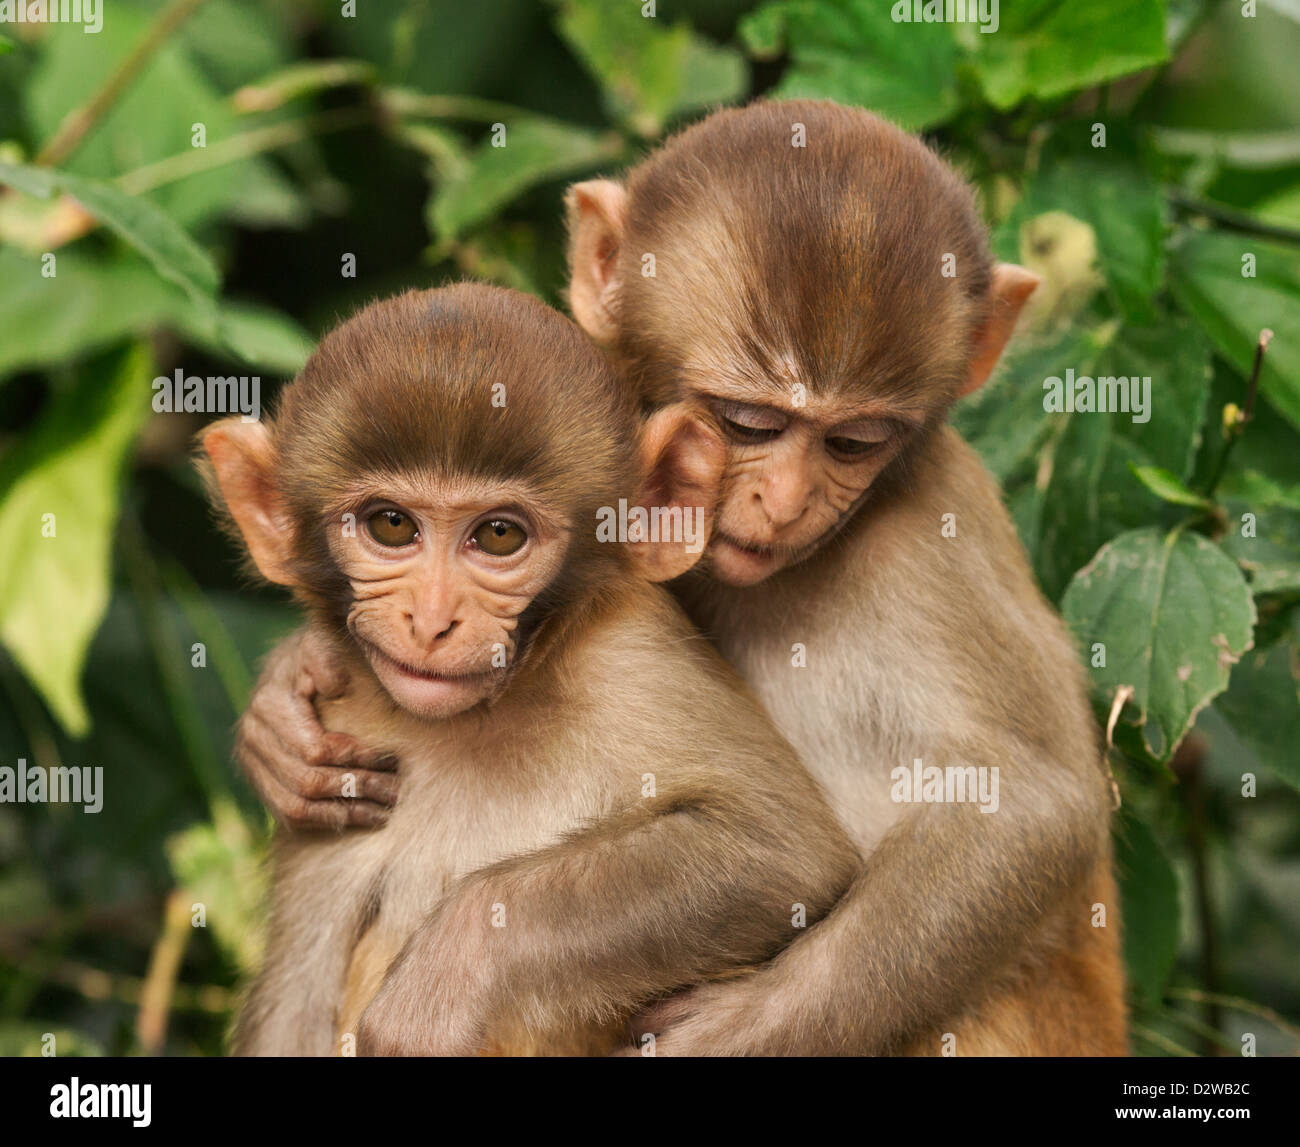 Monos macacos fotografías e imágenes de alta resolución - Alamy